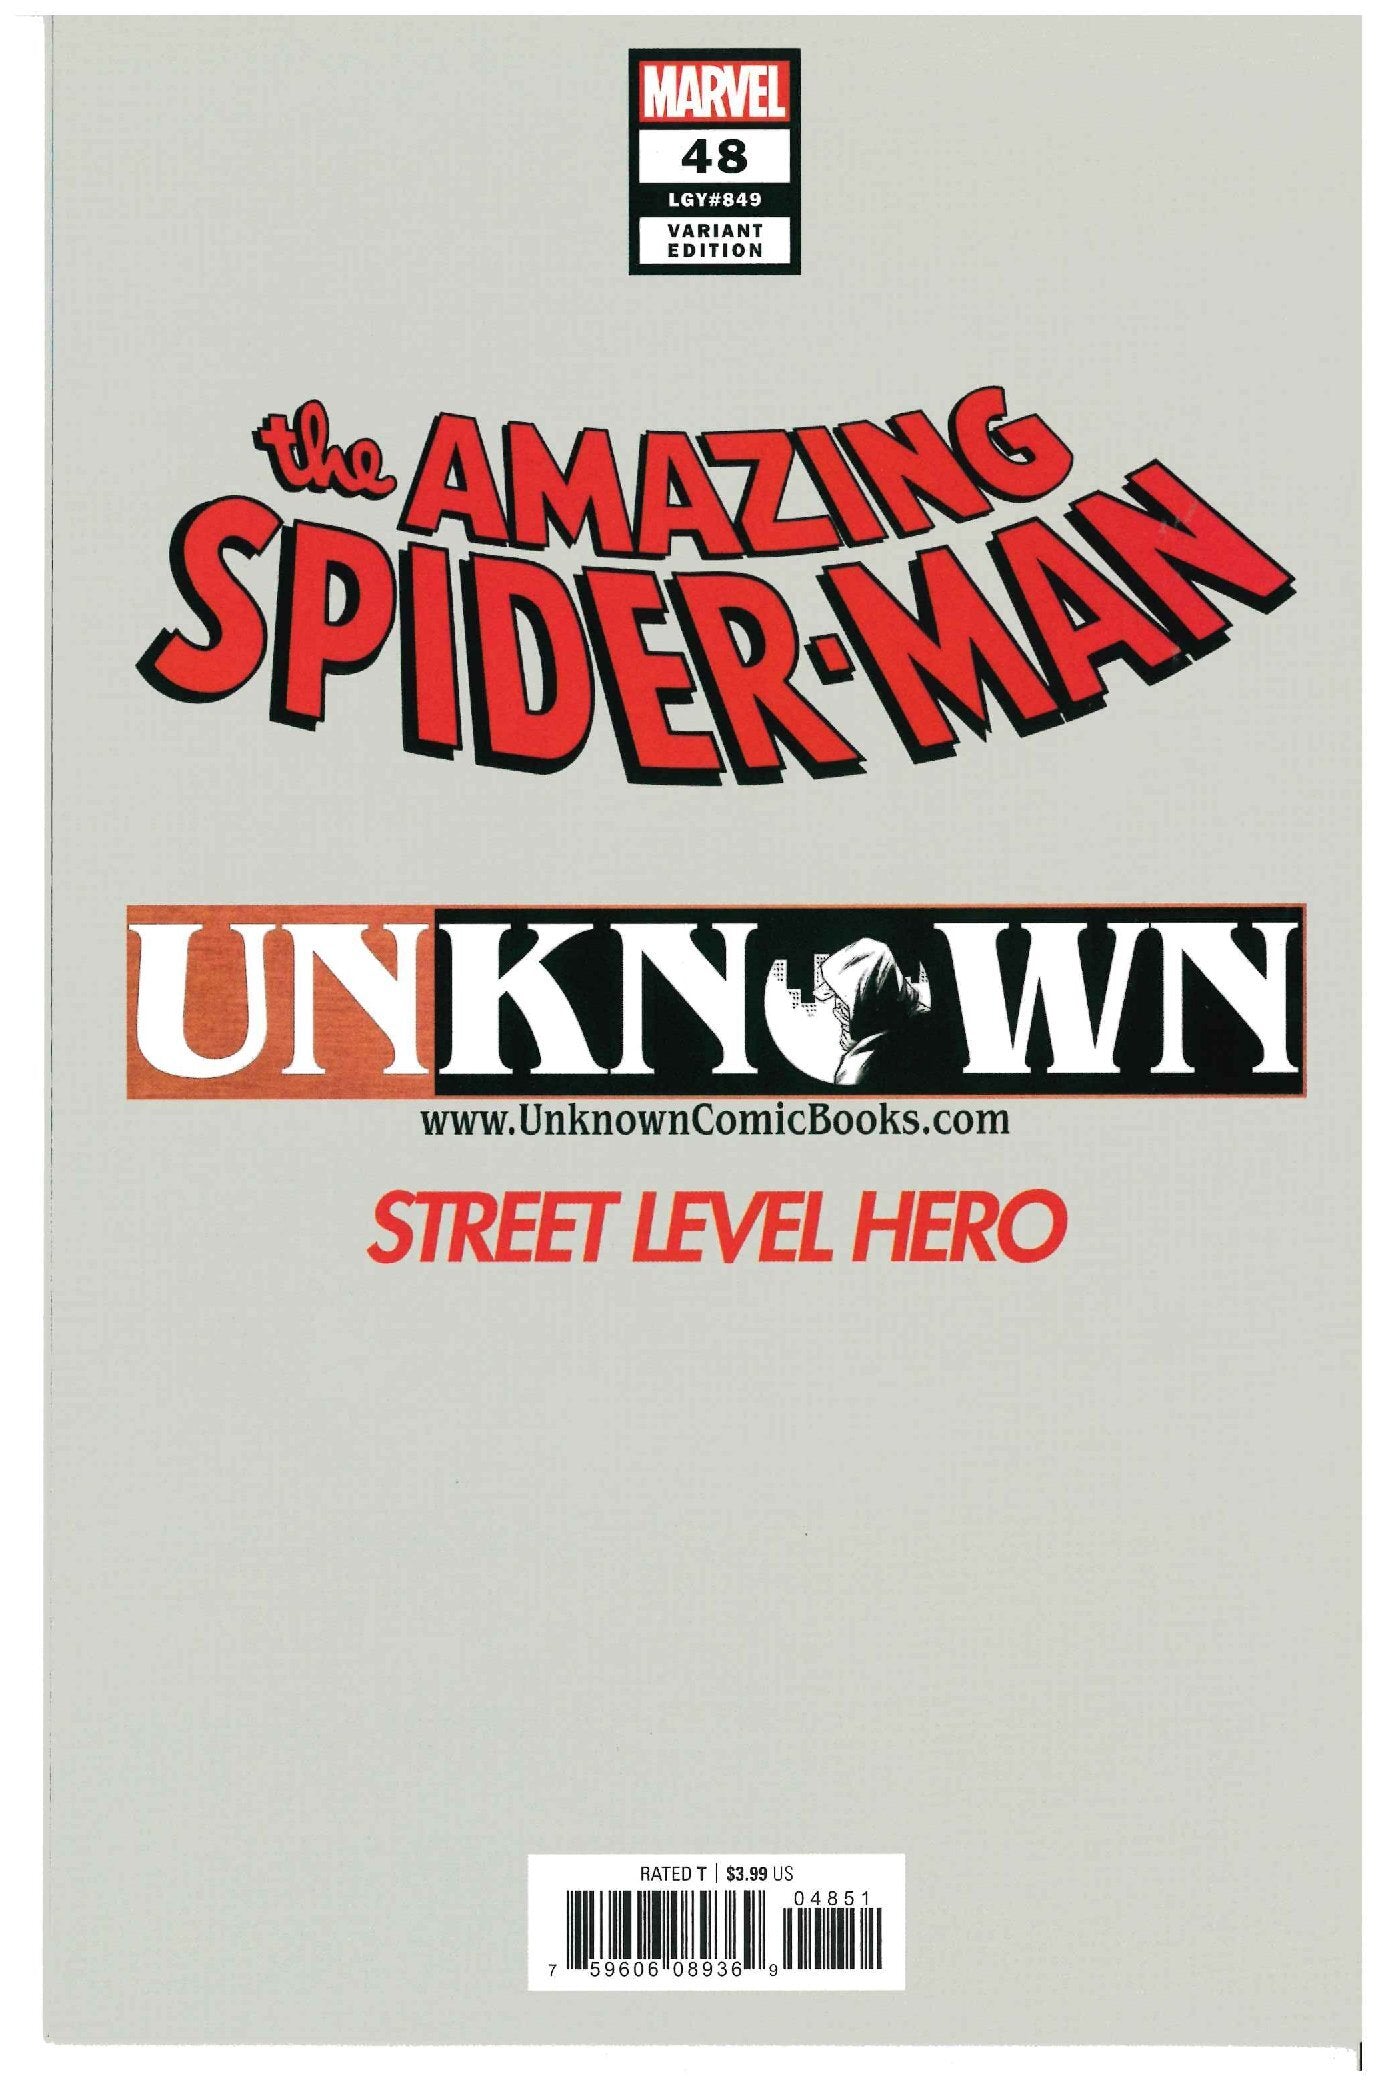 The Amazing Spider-Man #48 backside